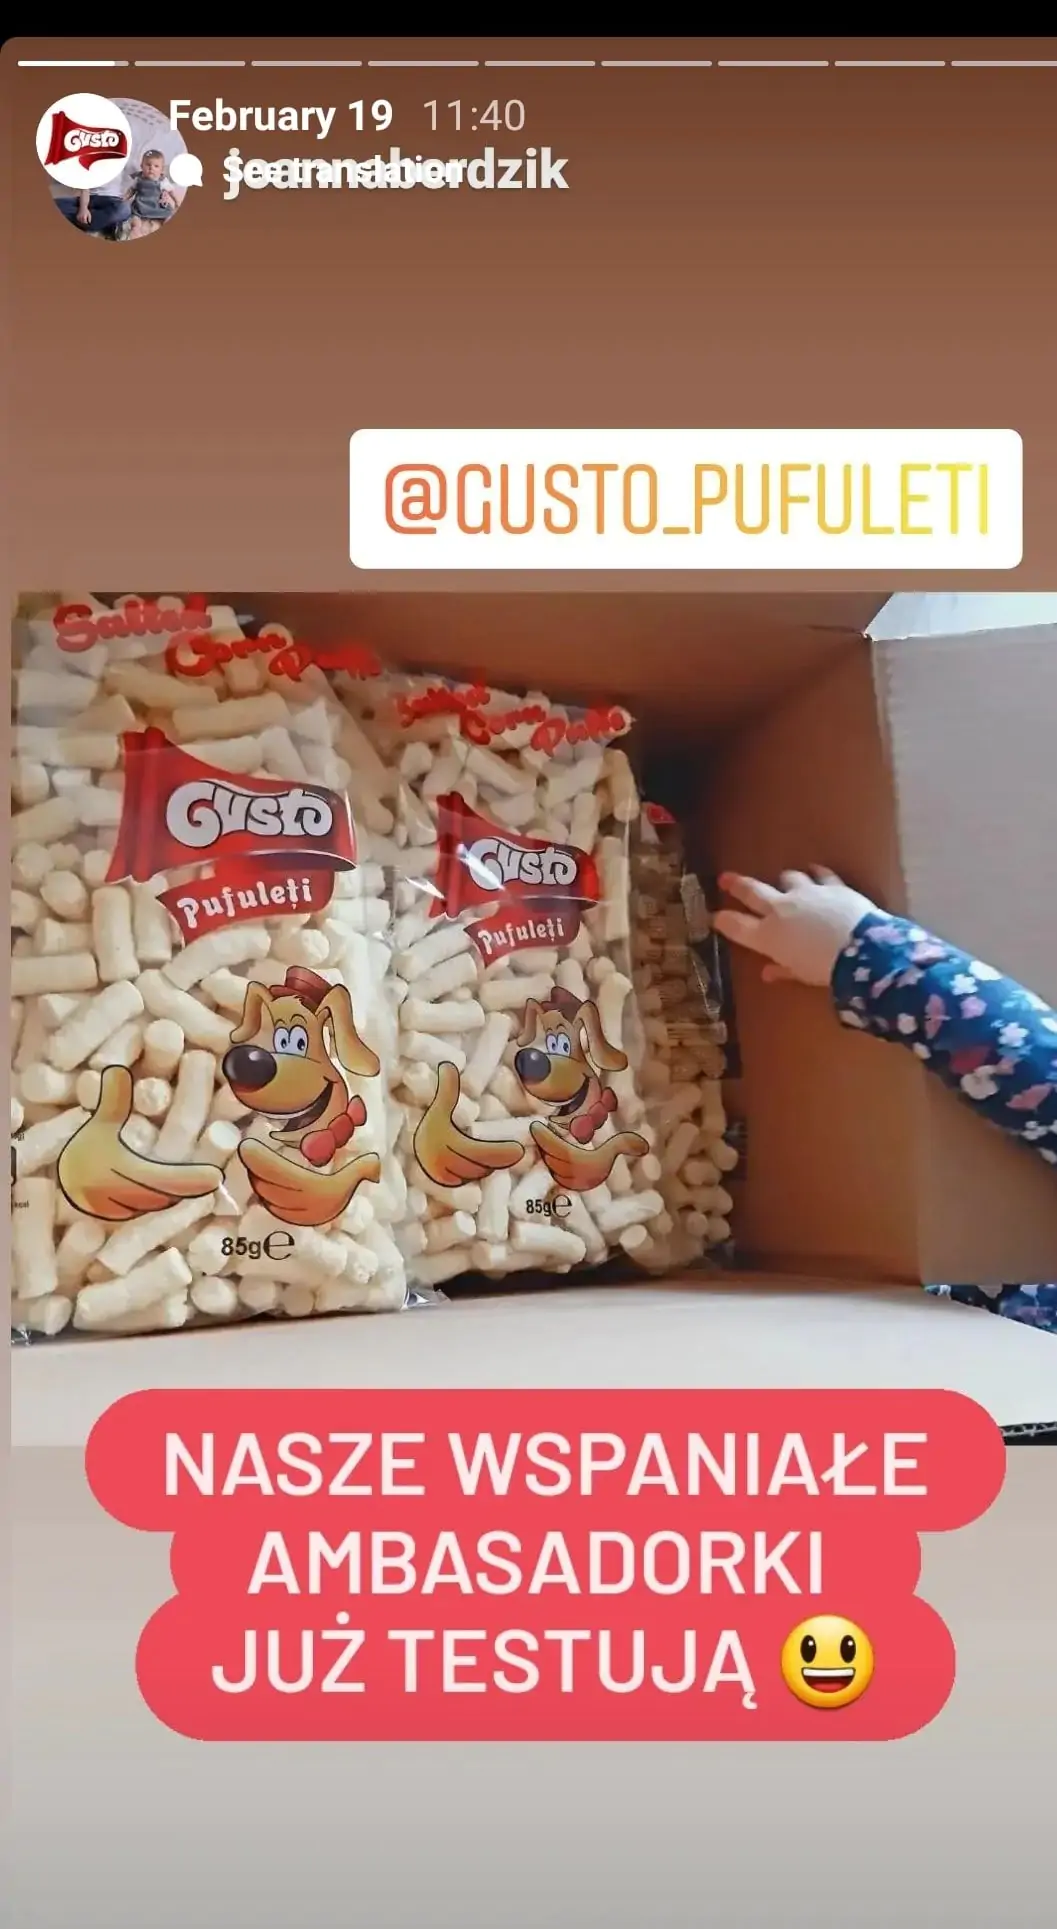 Kampania "Naturalnie, że tylko Gusto"_Instagram stories